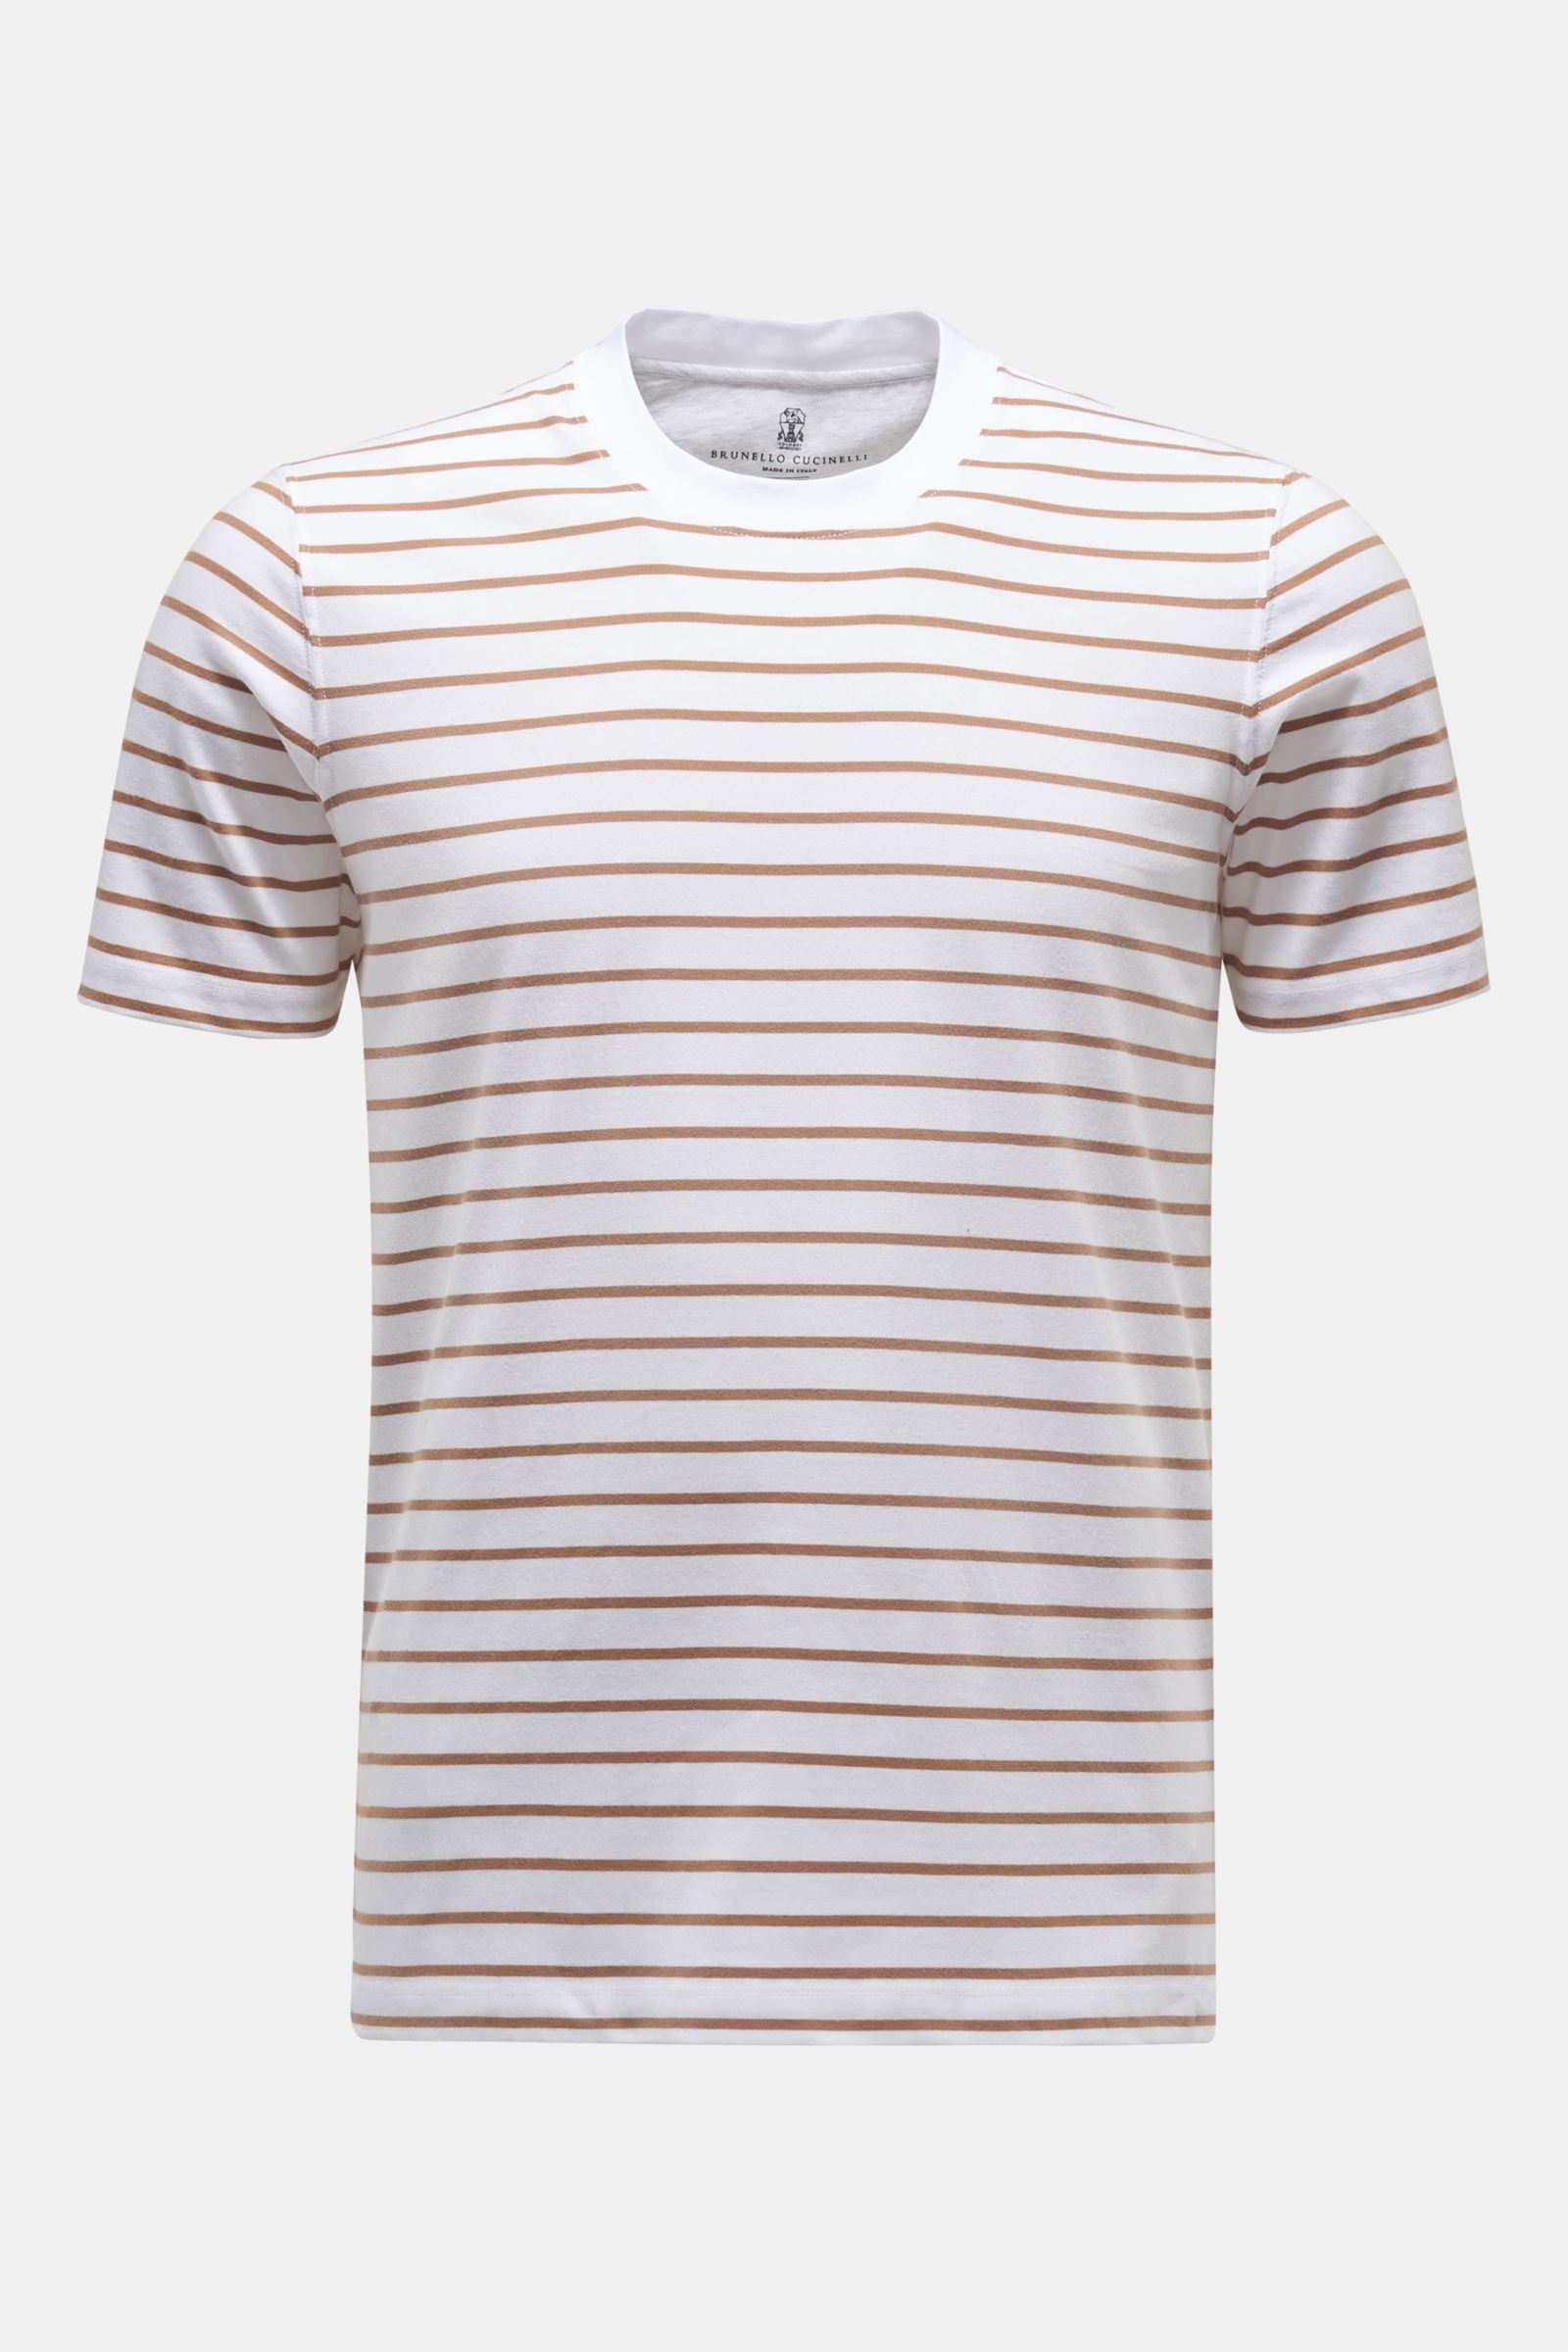 Crew neck T-shirt brown/white striped